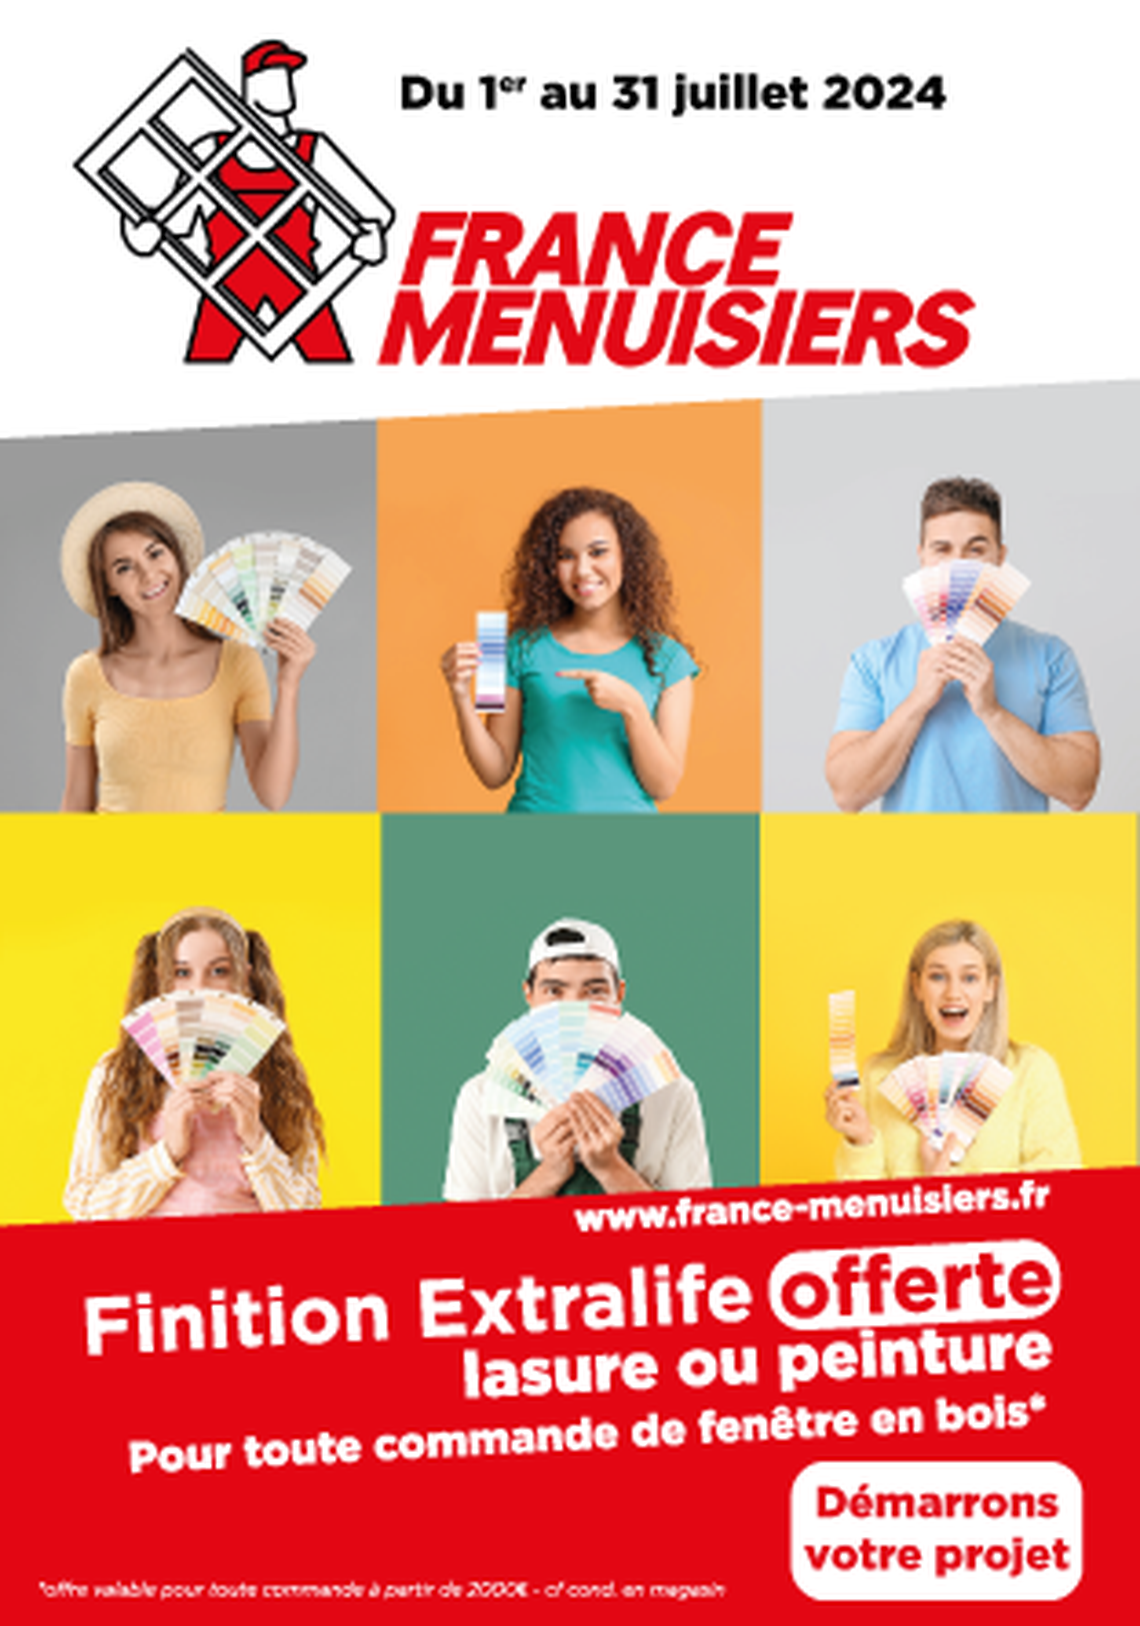 FRANCE MENUISIERS Niort - Finition Extralife Offerte